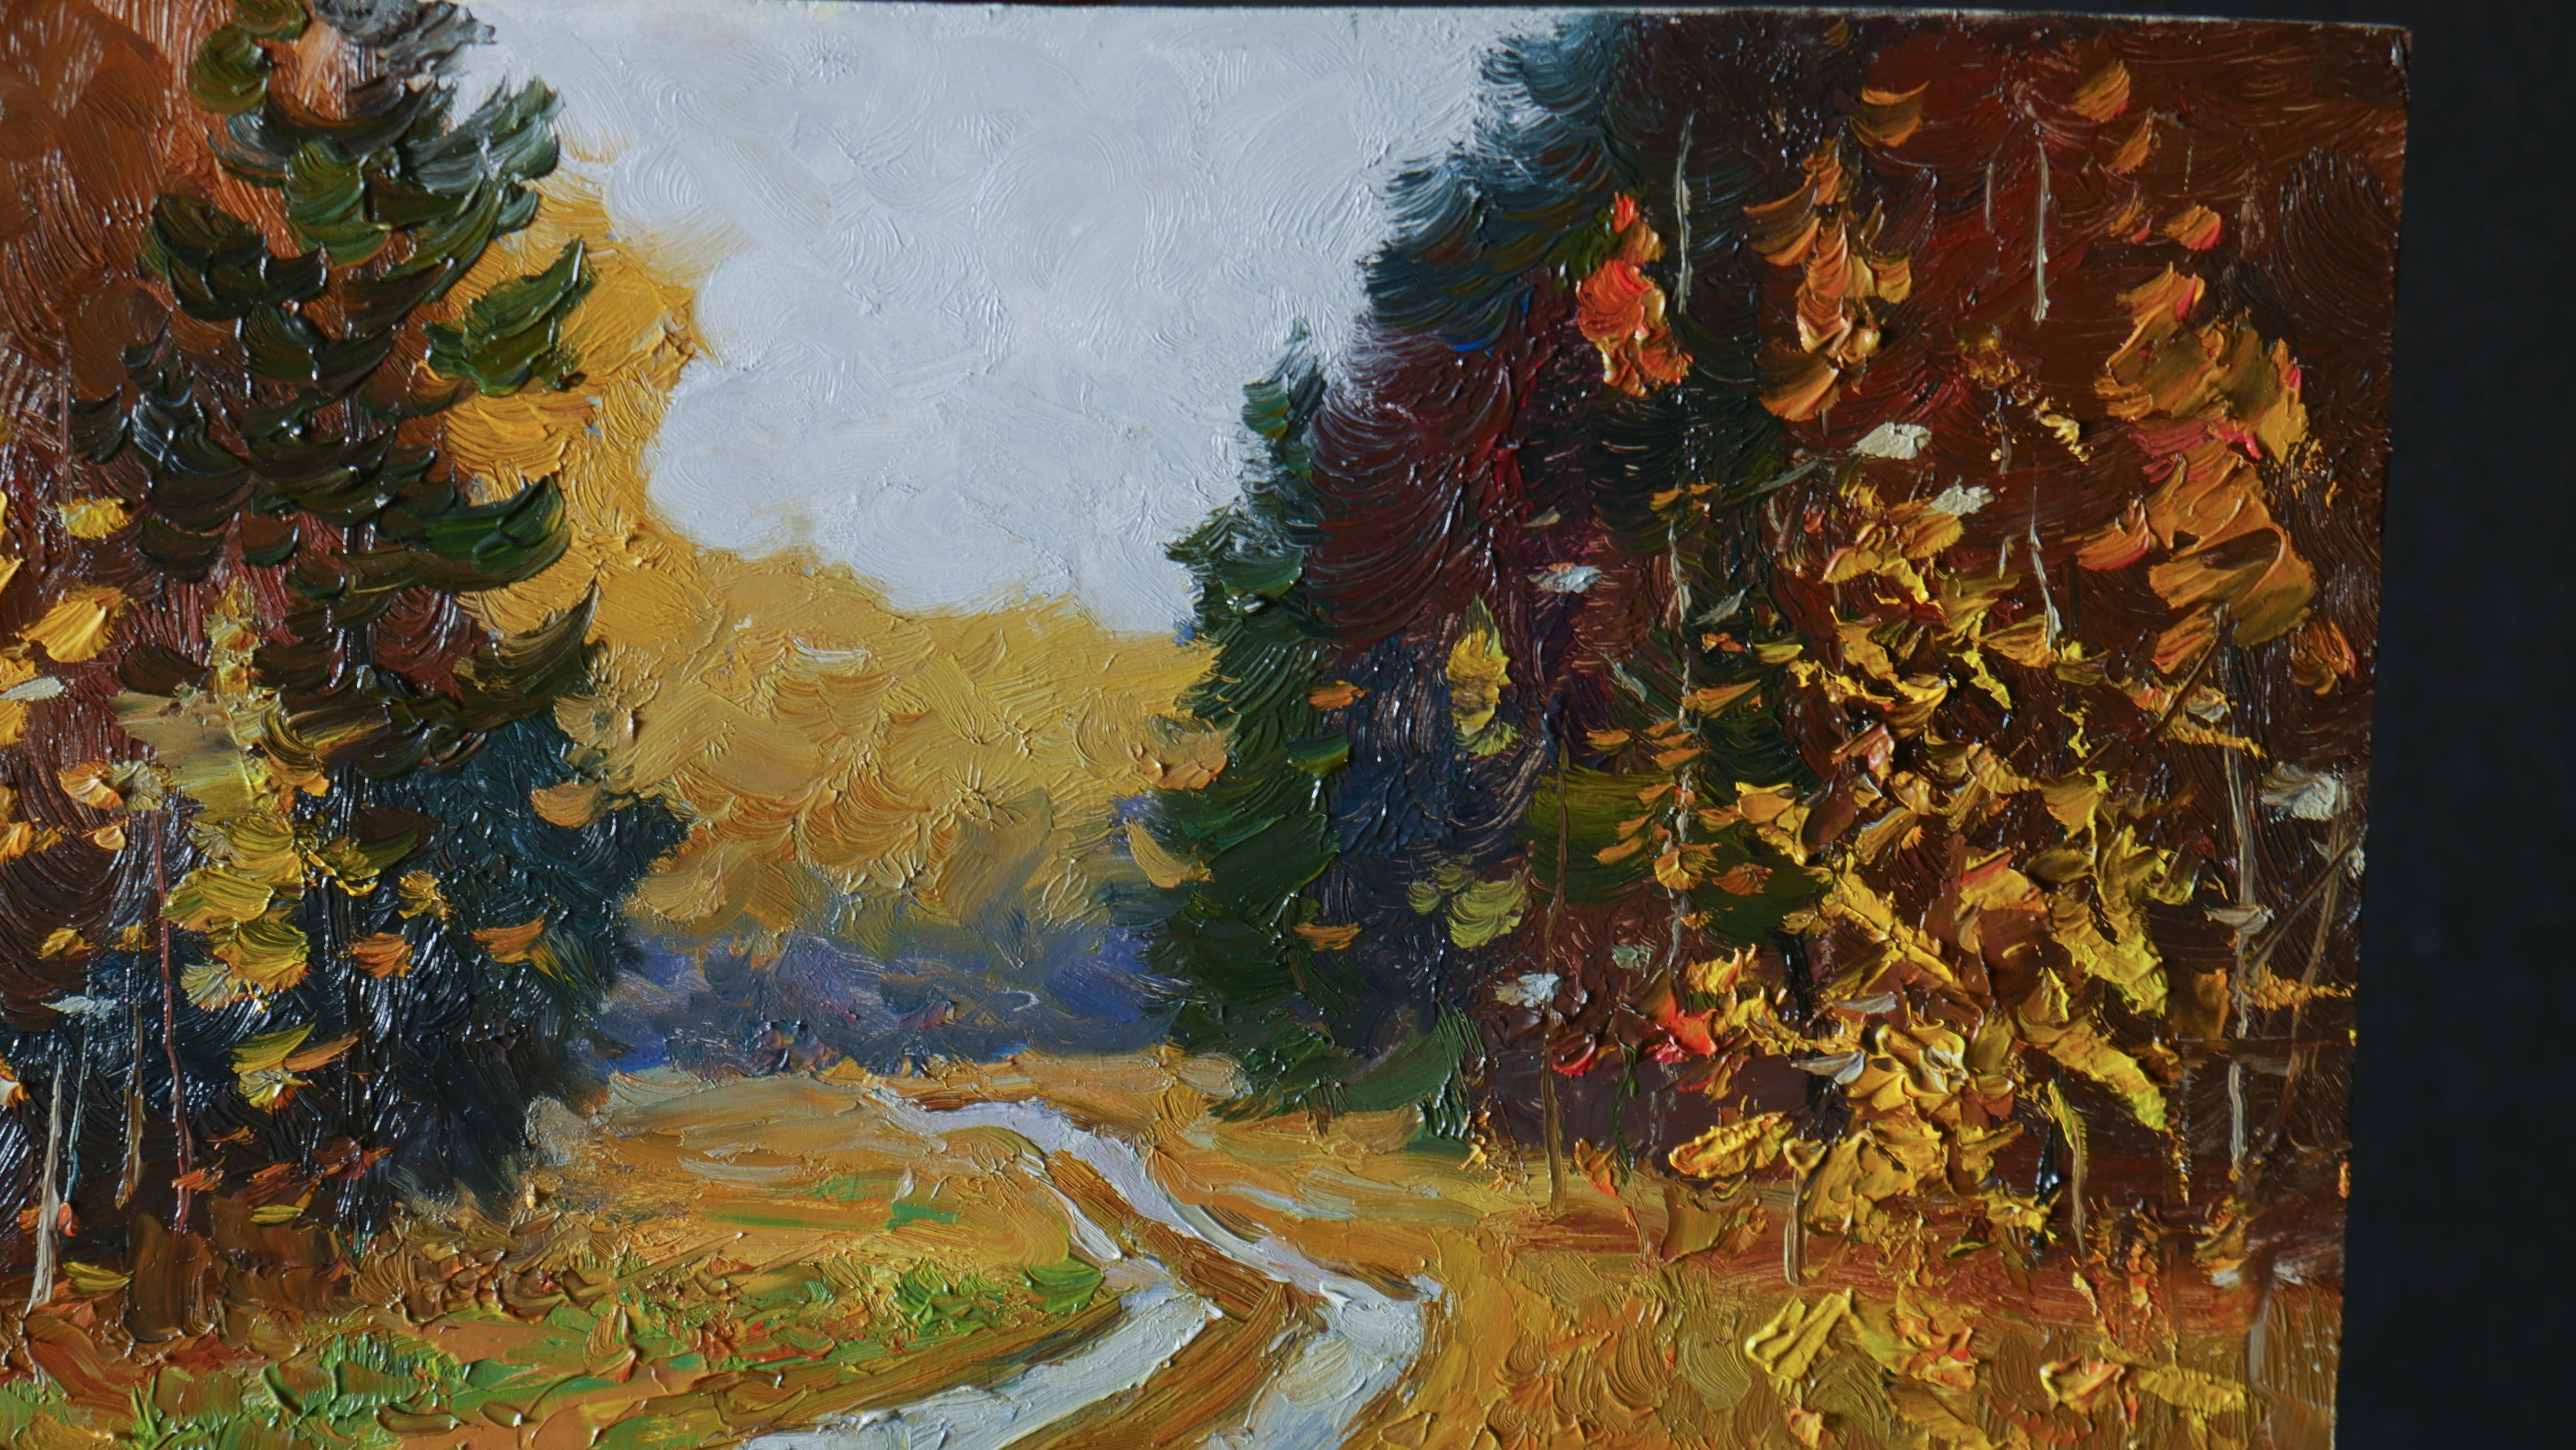 Across The Autumn Forest - autumn landscape painting For Sale 1